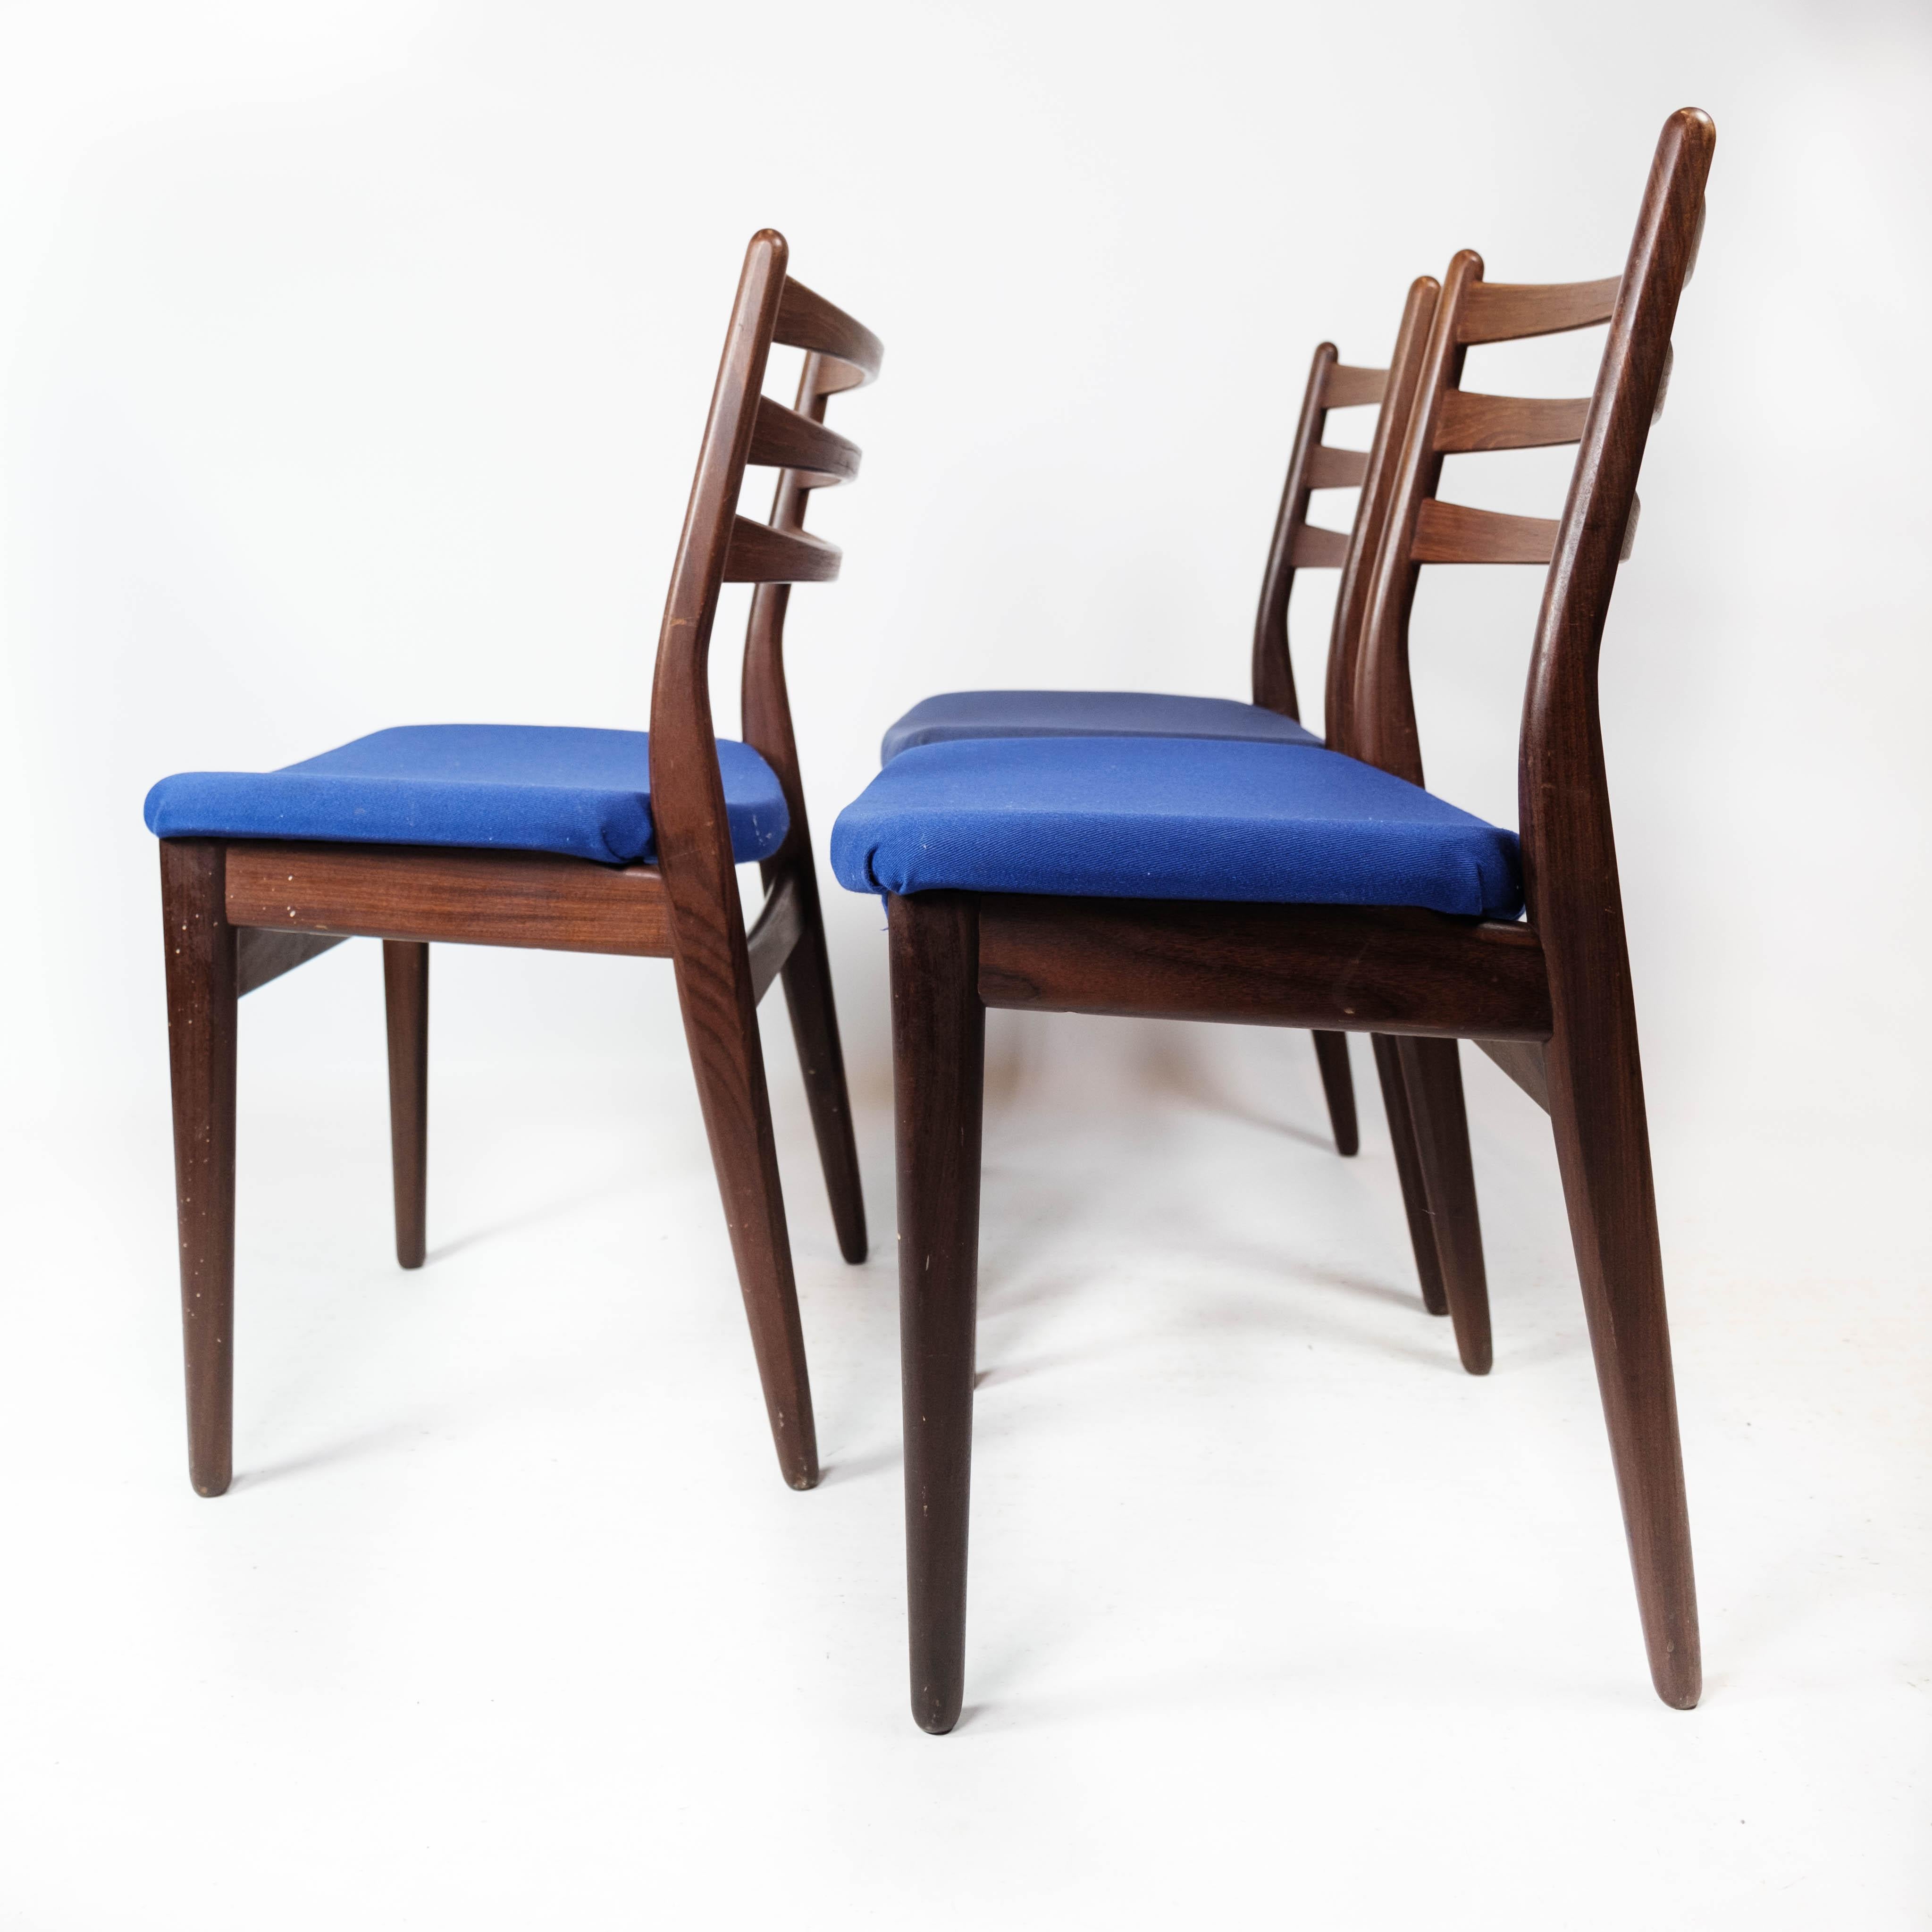 Mid-20th Century Set of Three Dining Room Chairs in Teak of Danish Design, 1960s